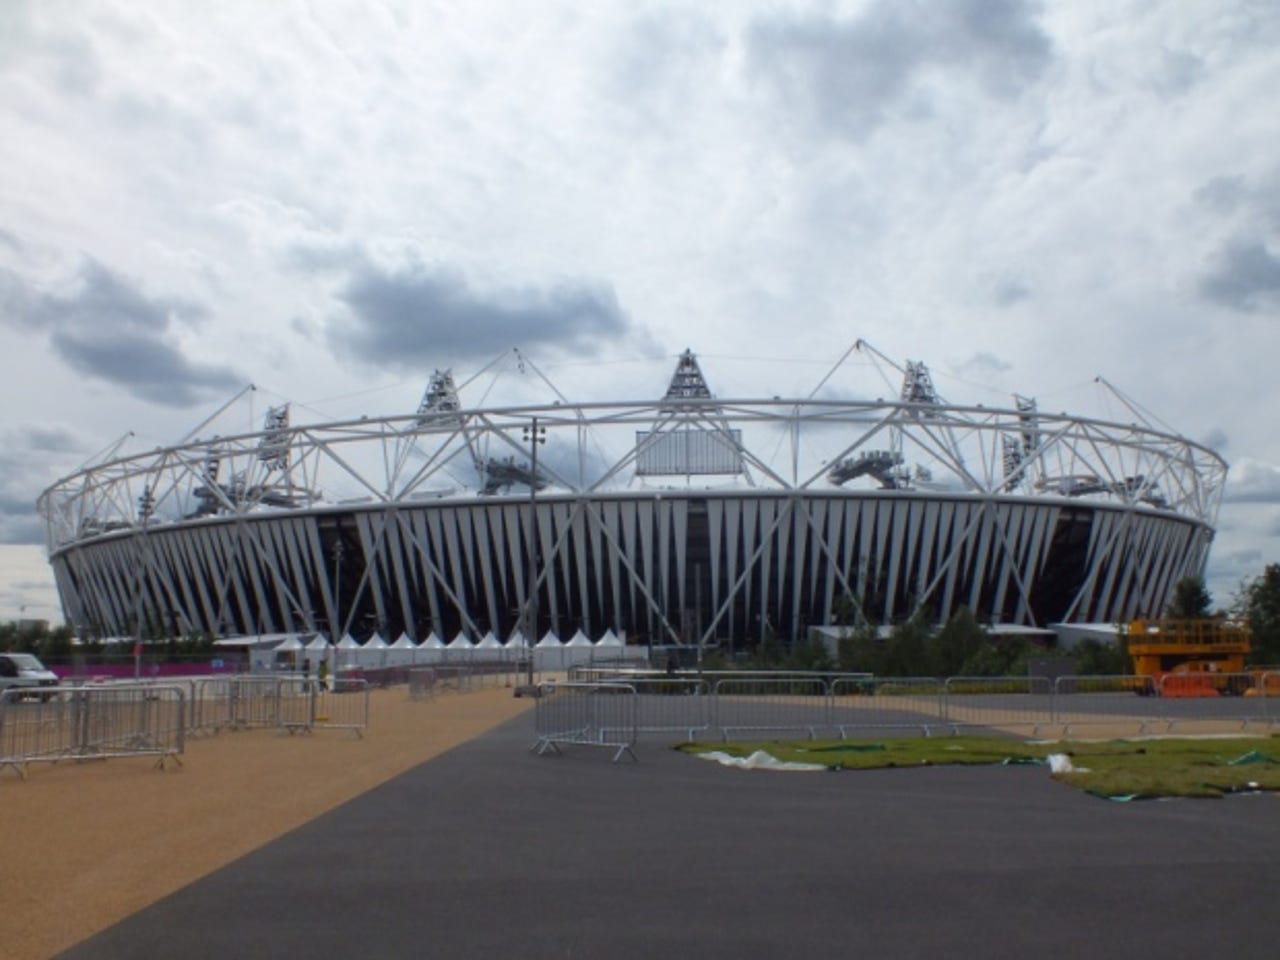 olympic-stadium.jpg